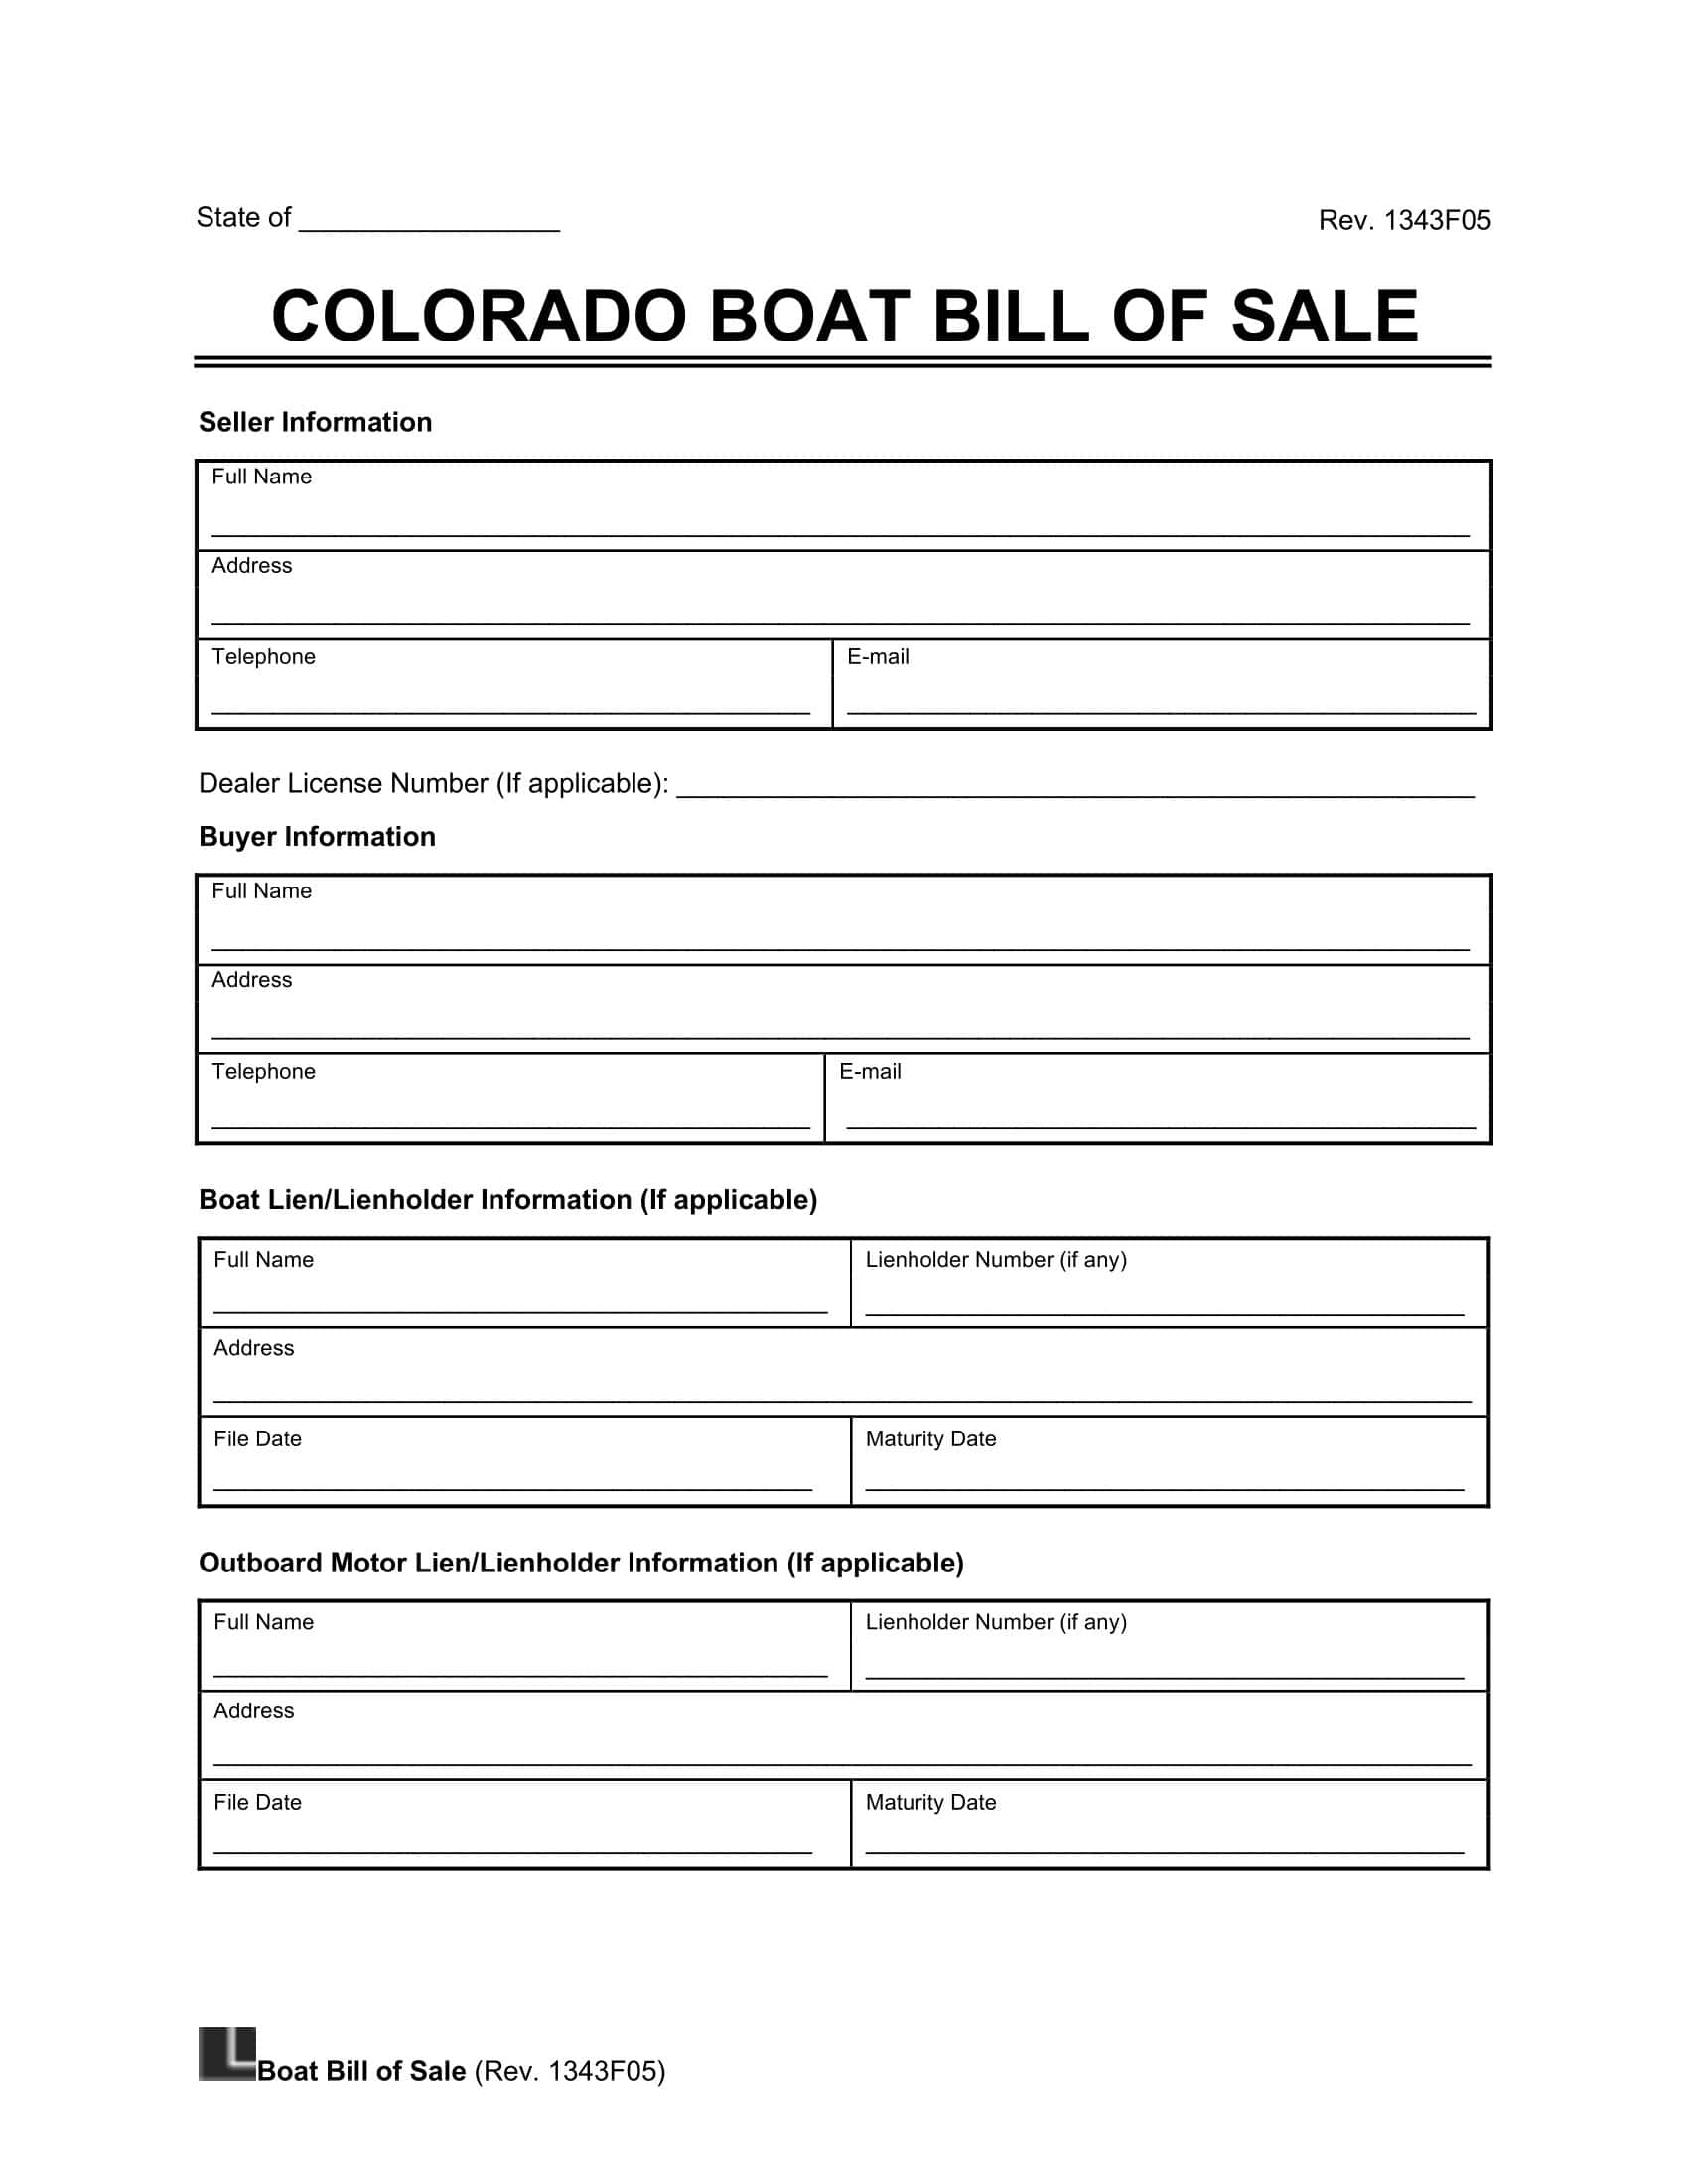 Colorado boat bill of sale screenshot